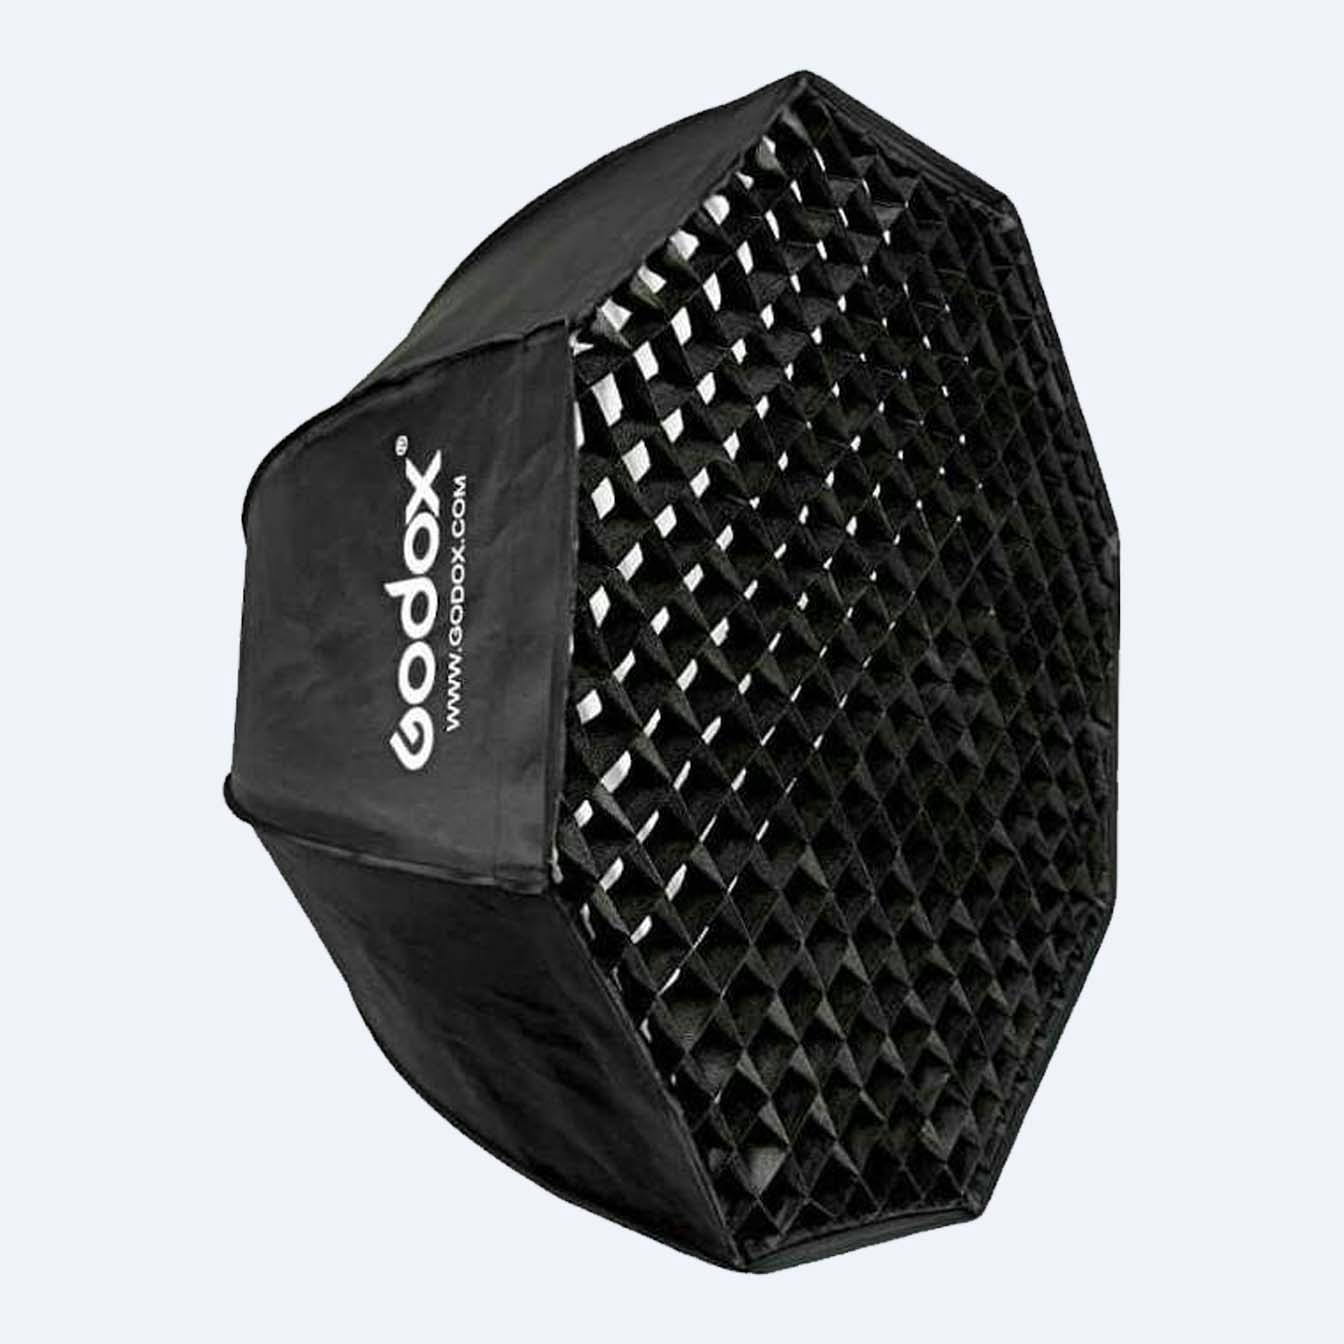 Softbox Godox 120 cm